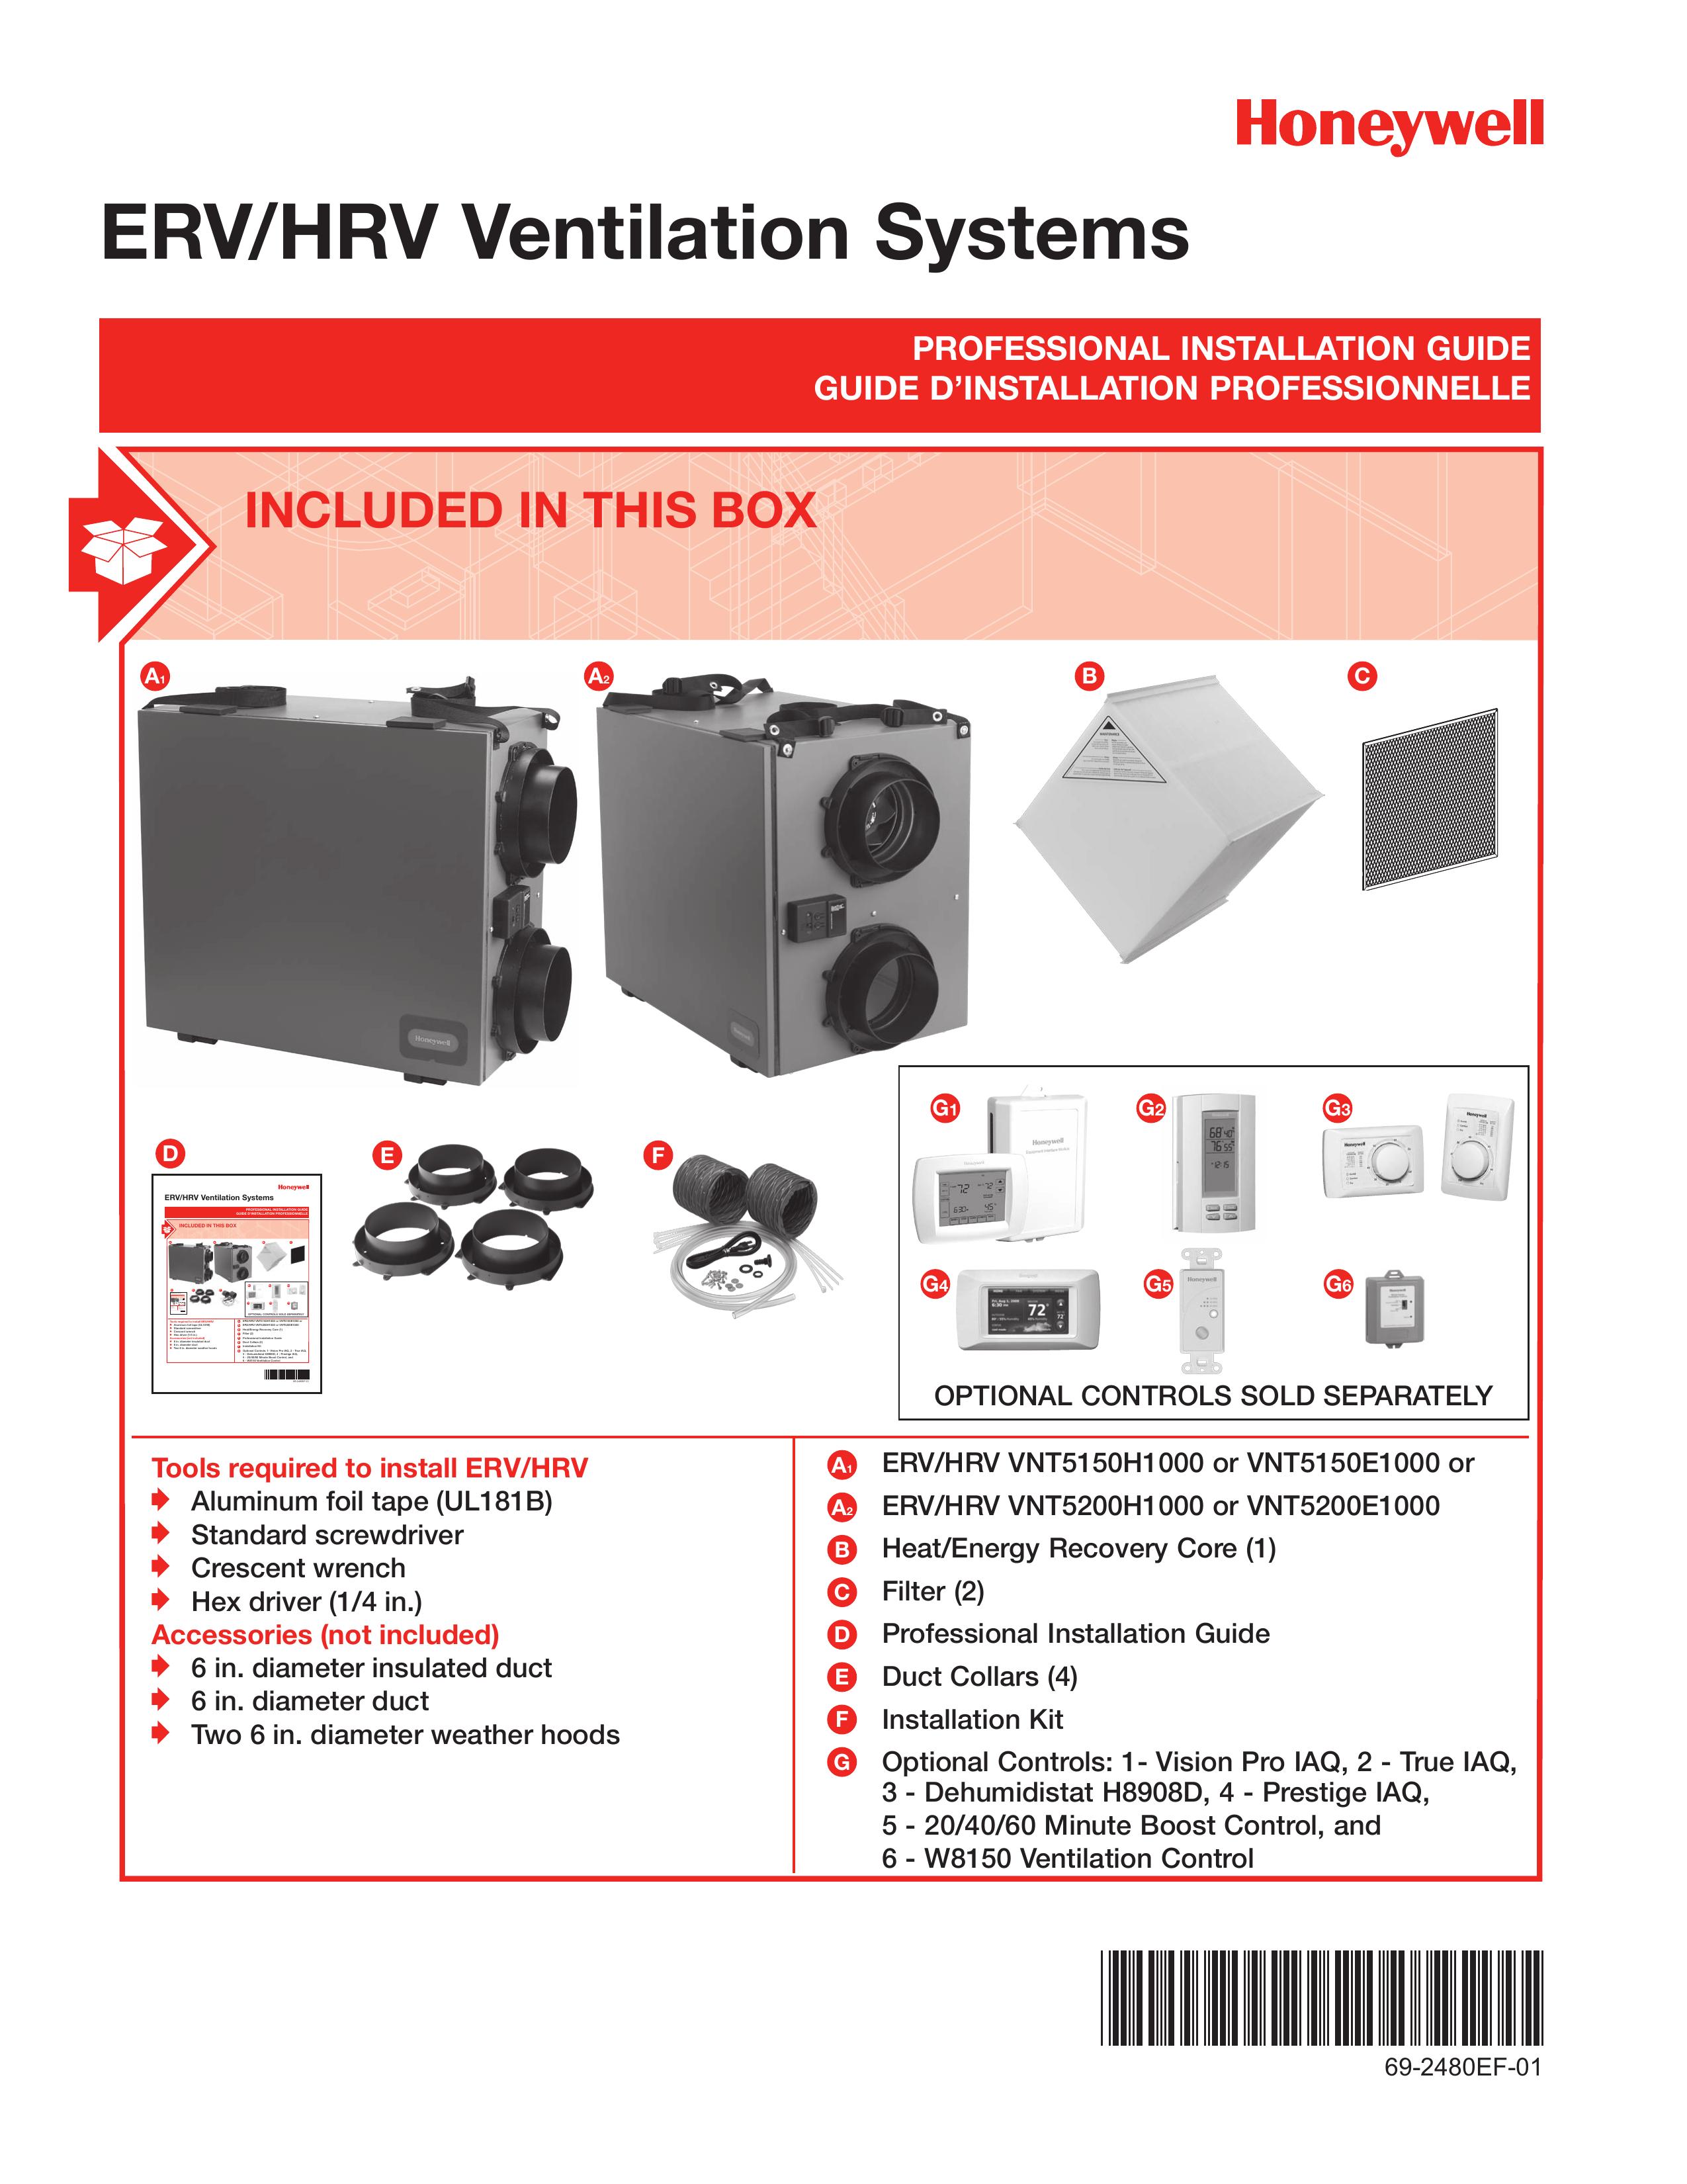 Honeywell VNT5200H1000 Ventilation Hood User Manual